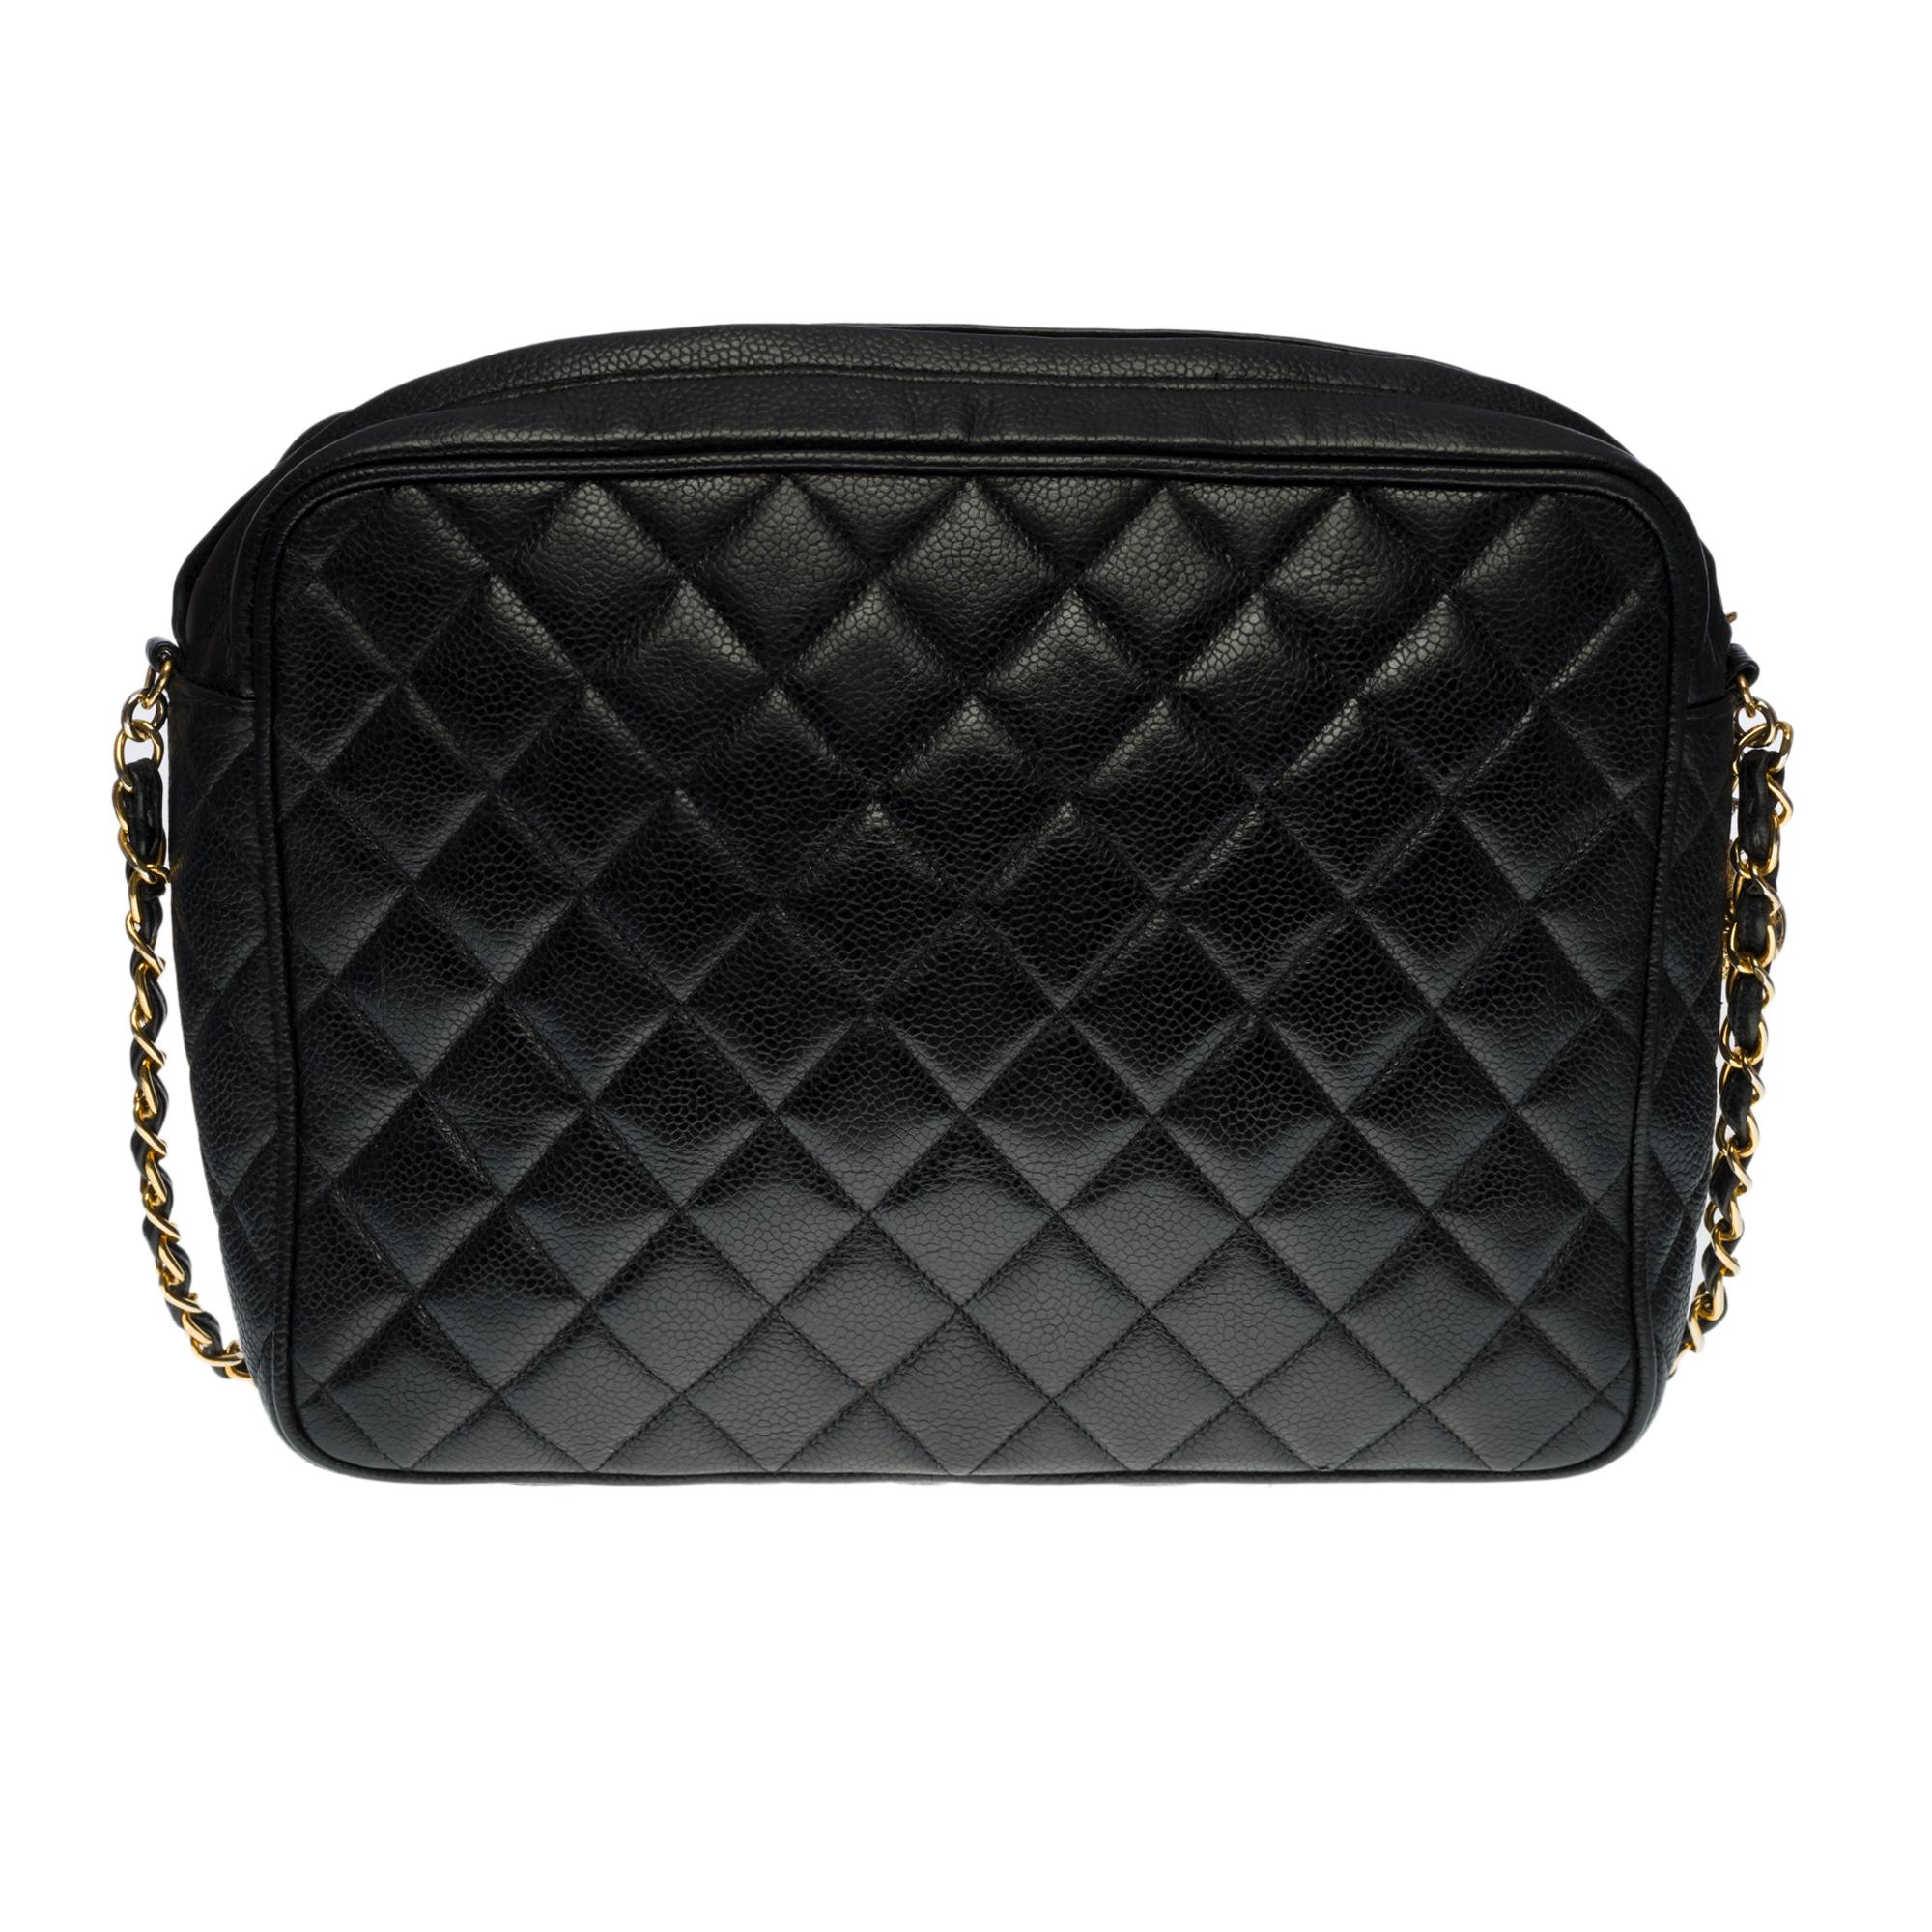 Sublime Chanel Camera Front Pocket handbag from the 